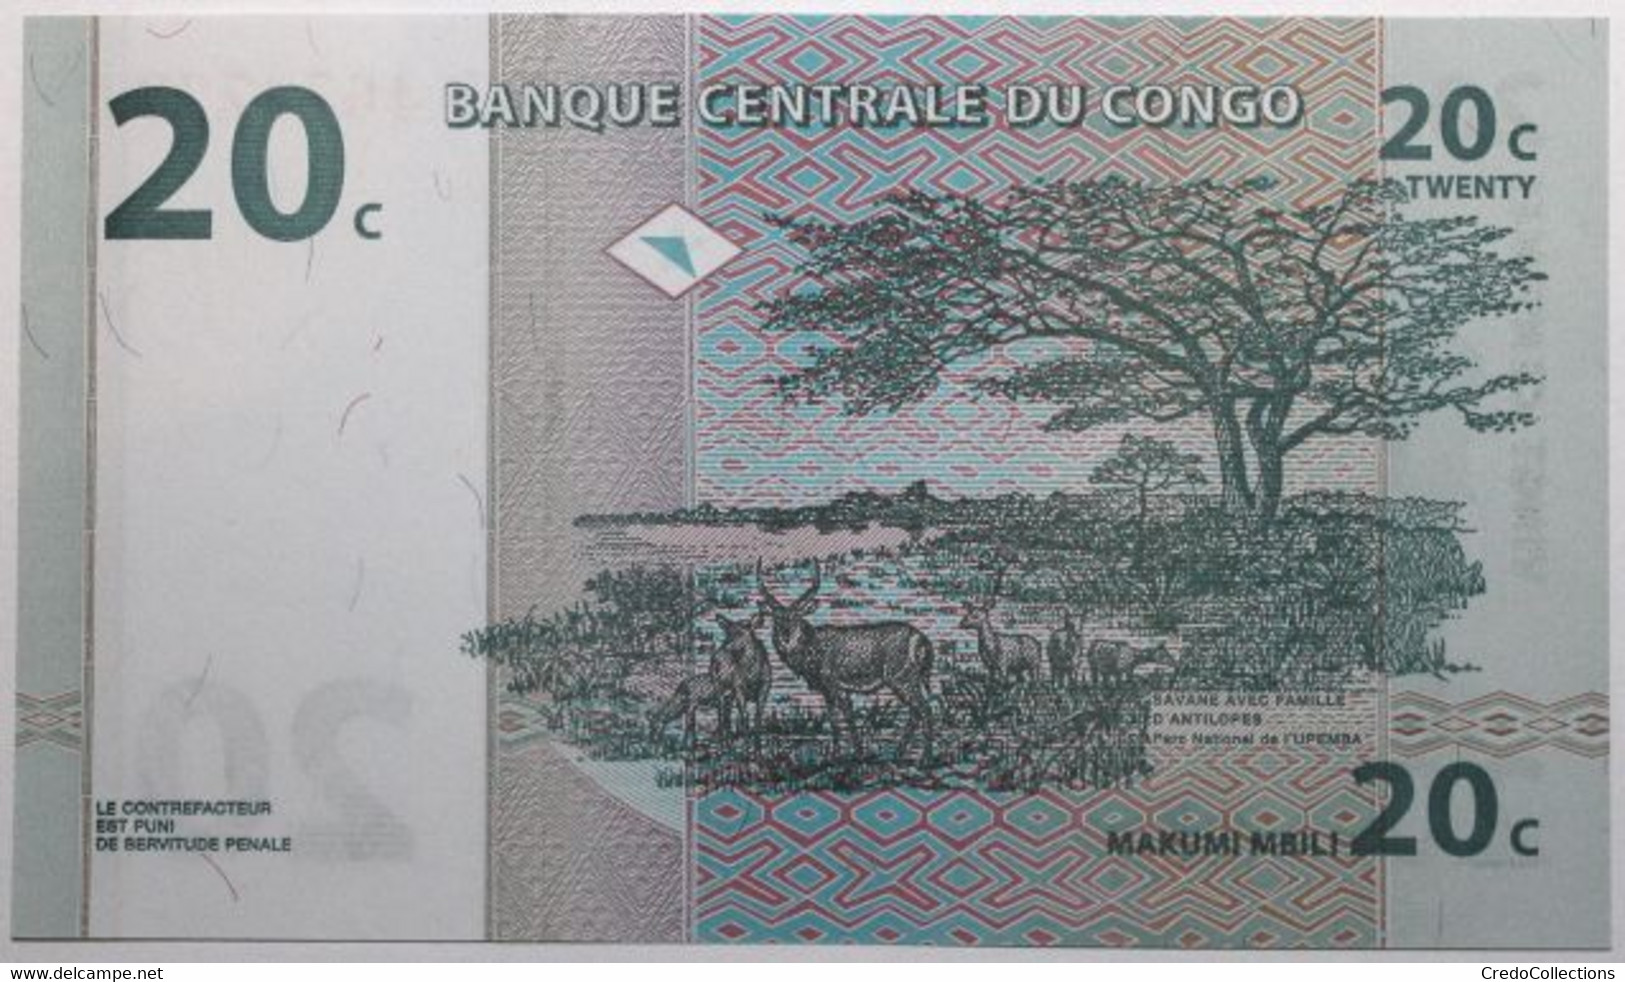 Congo (RD) - 20 Centimes - 1997 - PICK 83a - NEUF - Democratic Republic Of The Congo & Zaire